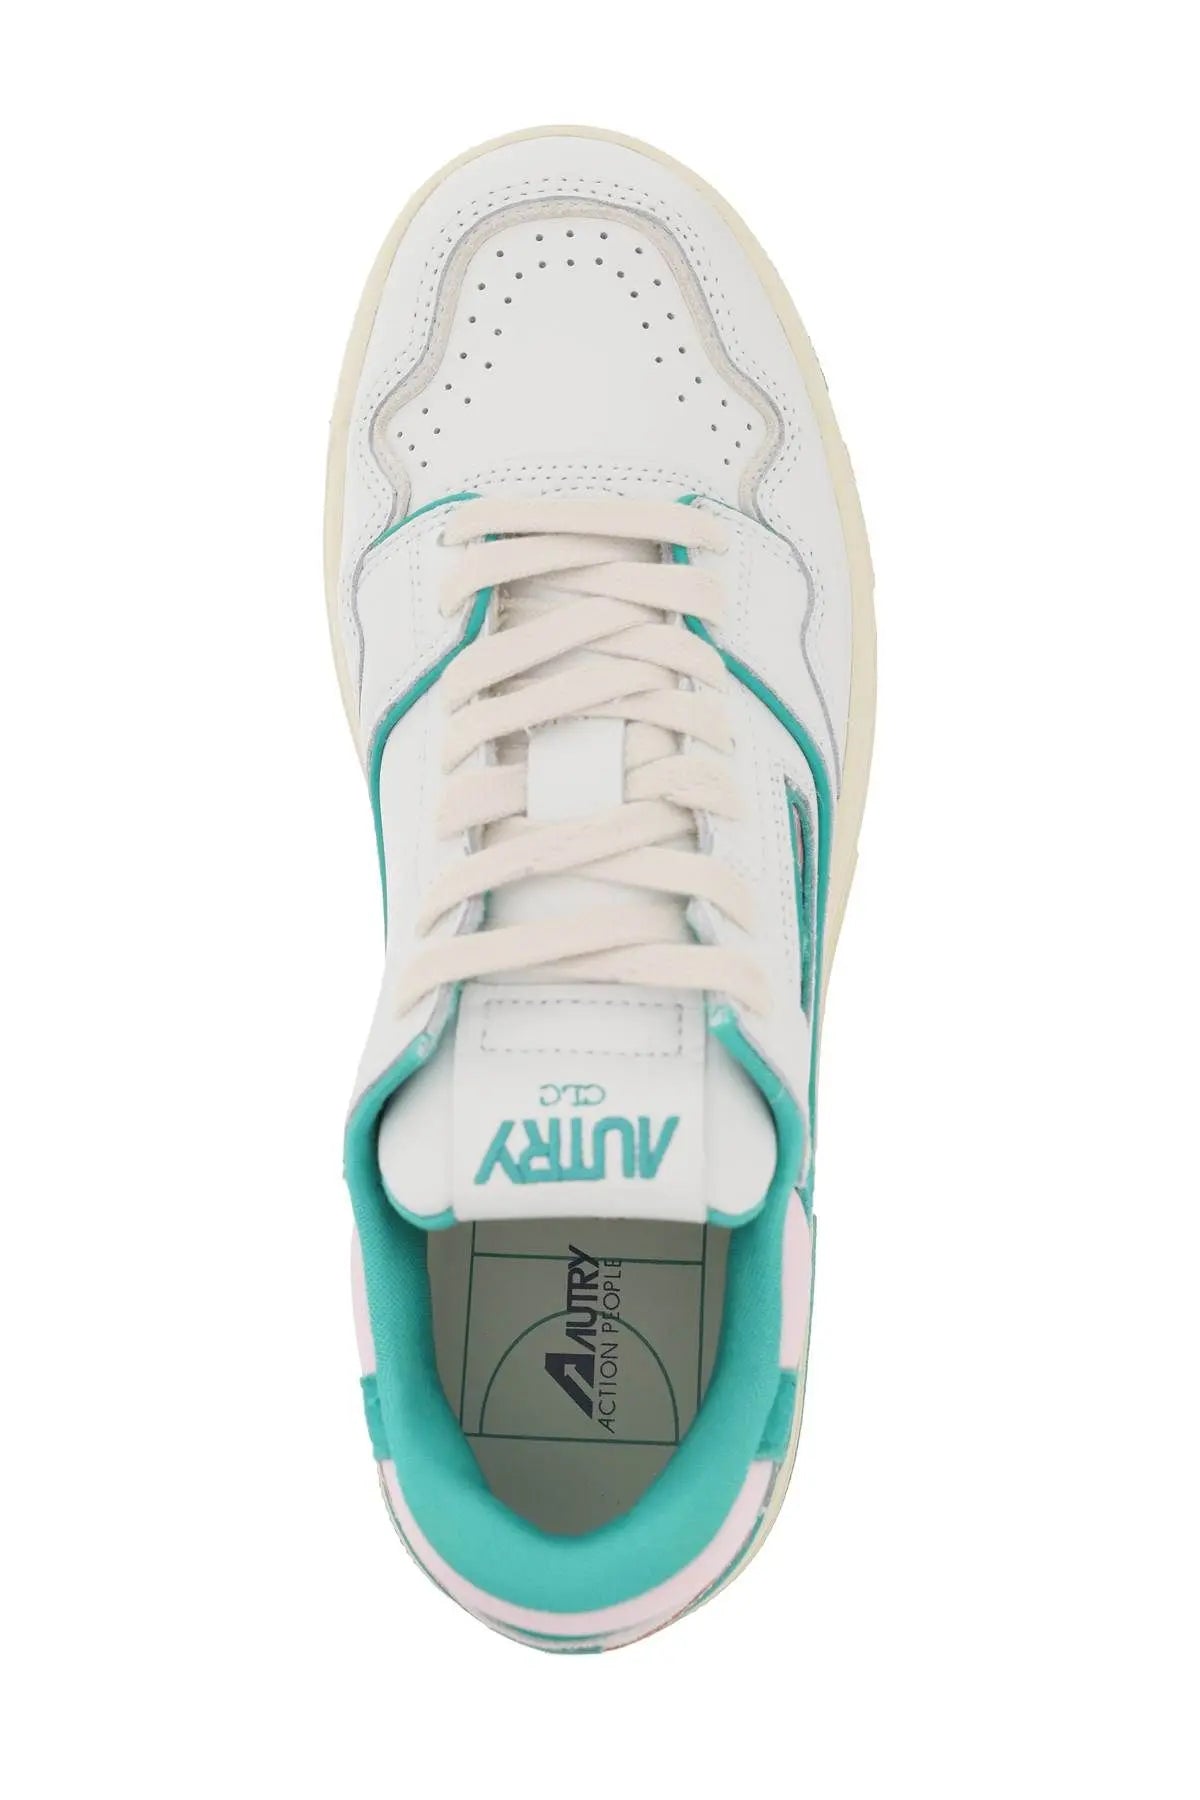 Autry sneakers clc Bianco verde e rosa